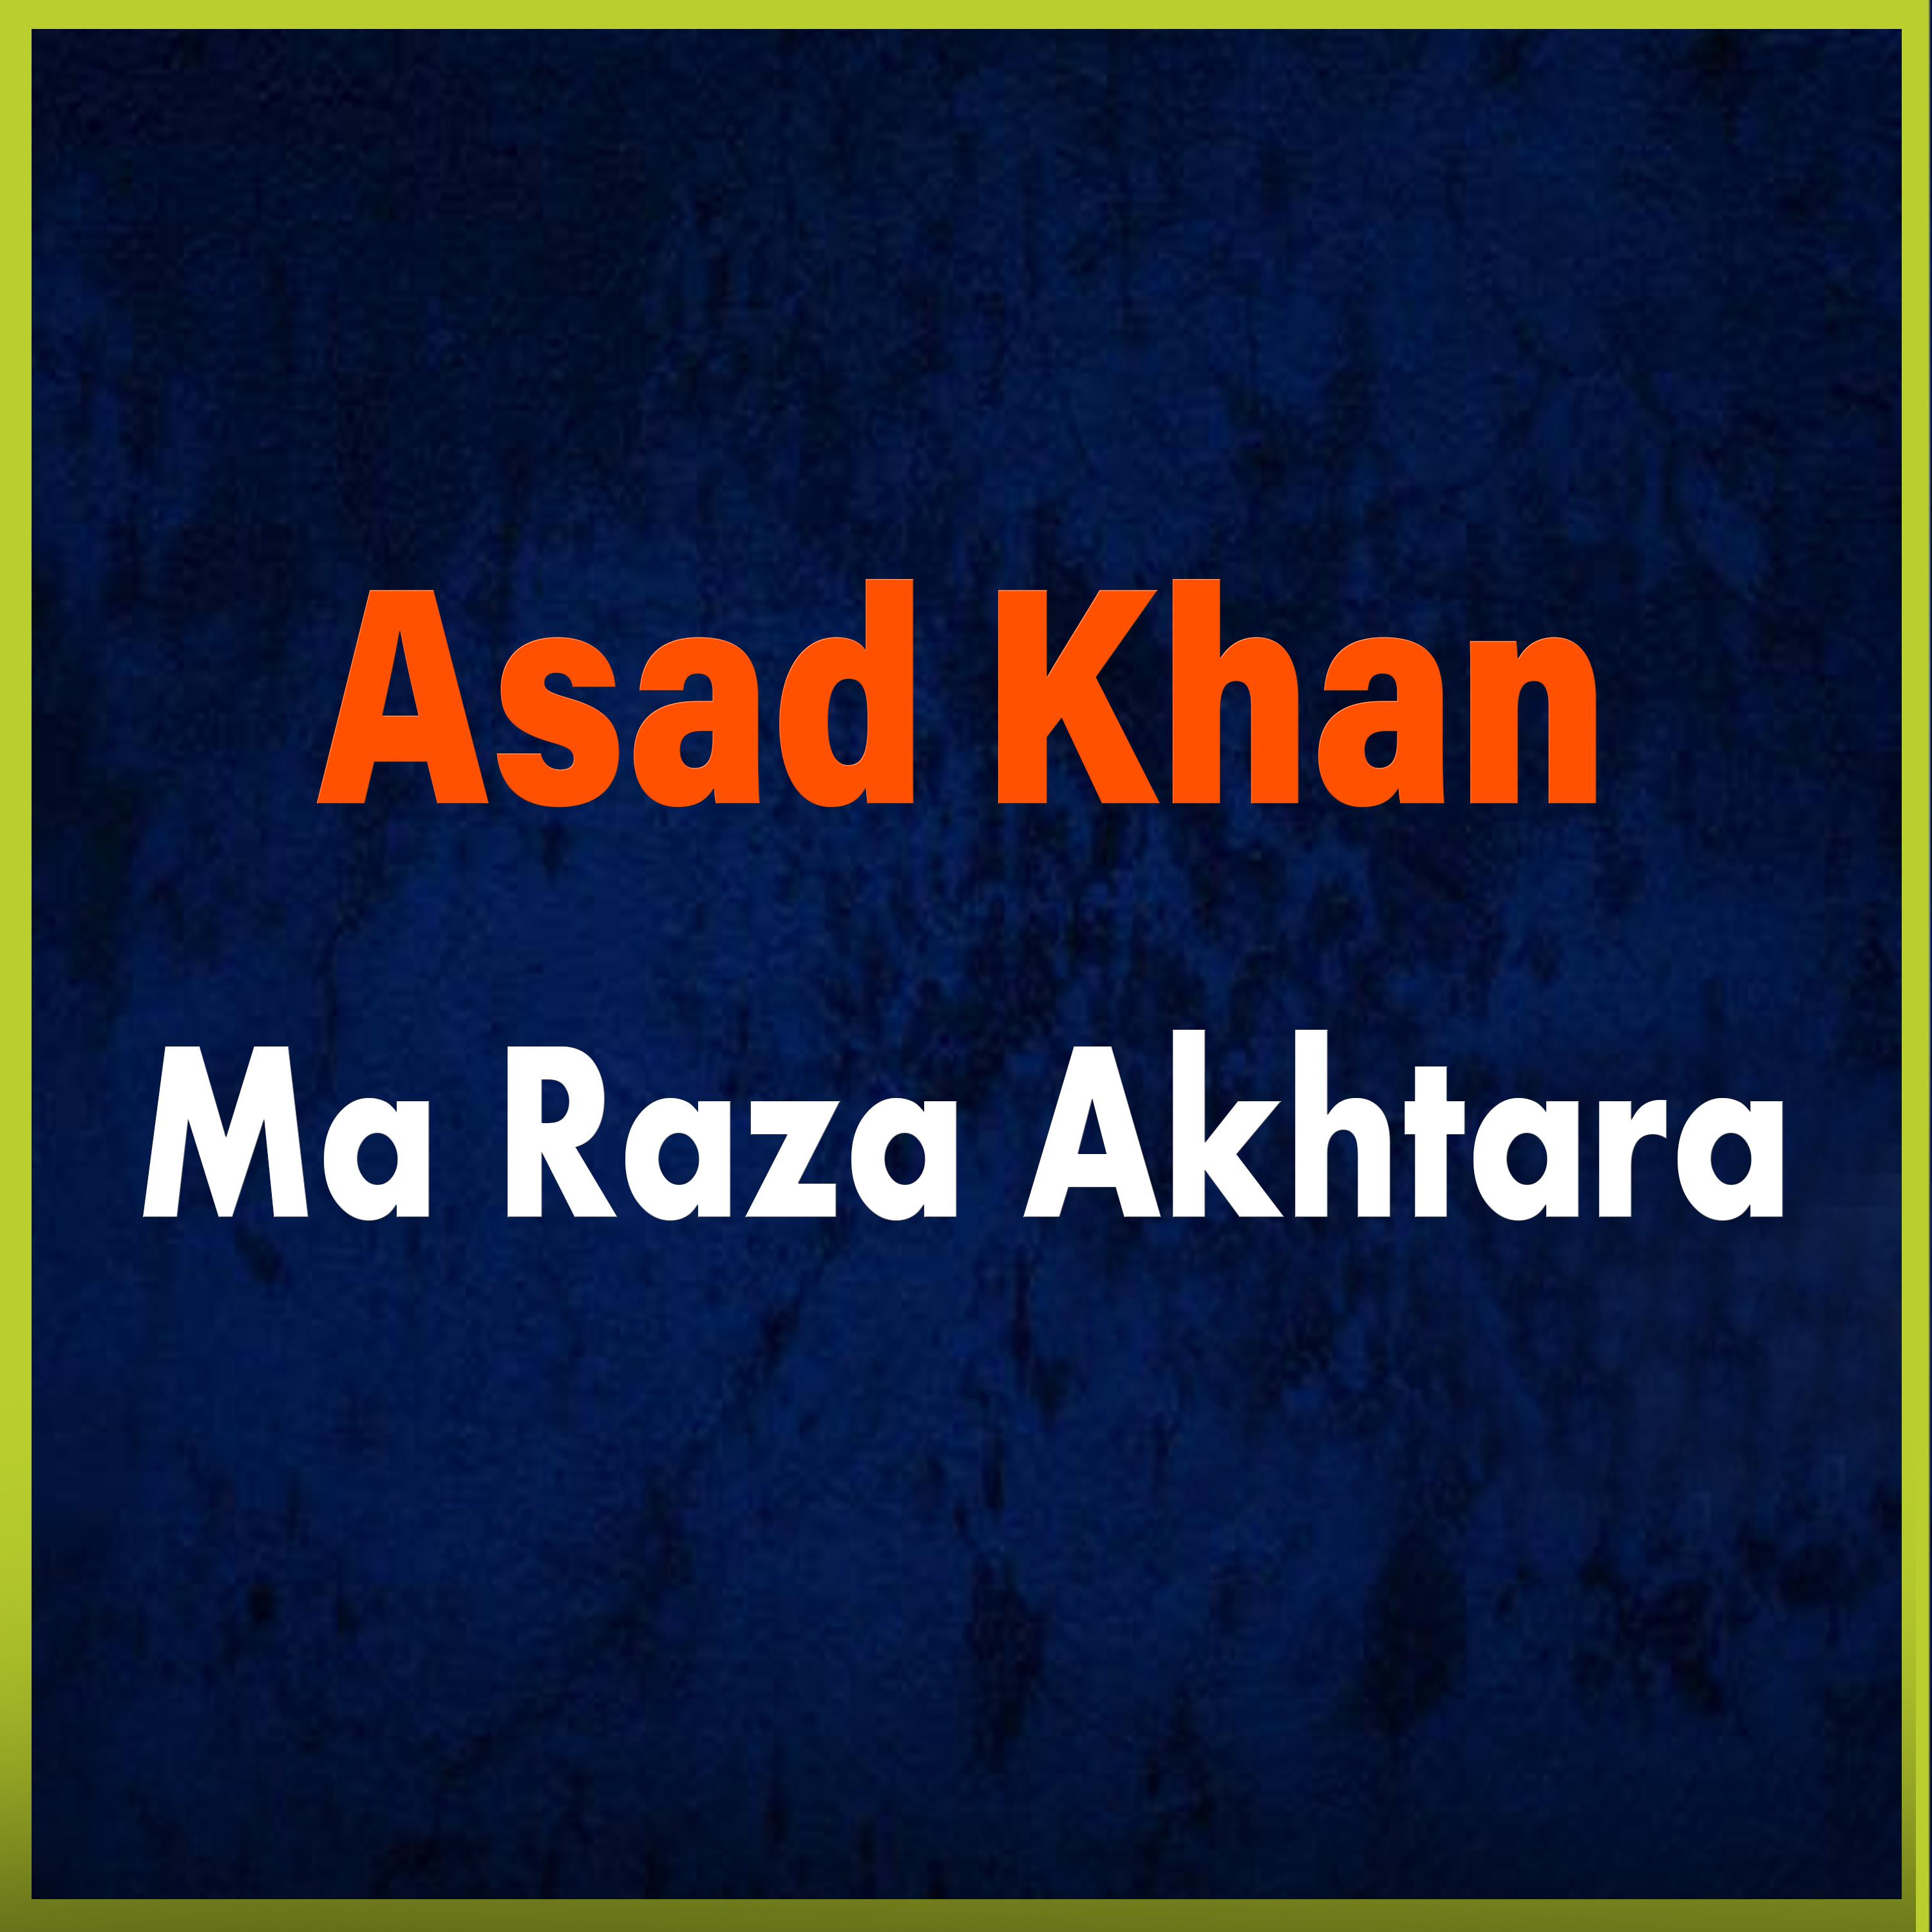 Asad Khan - Ma Raza Akhtara